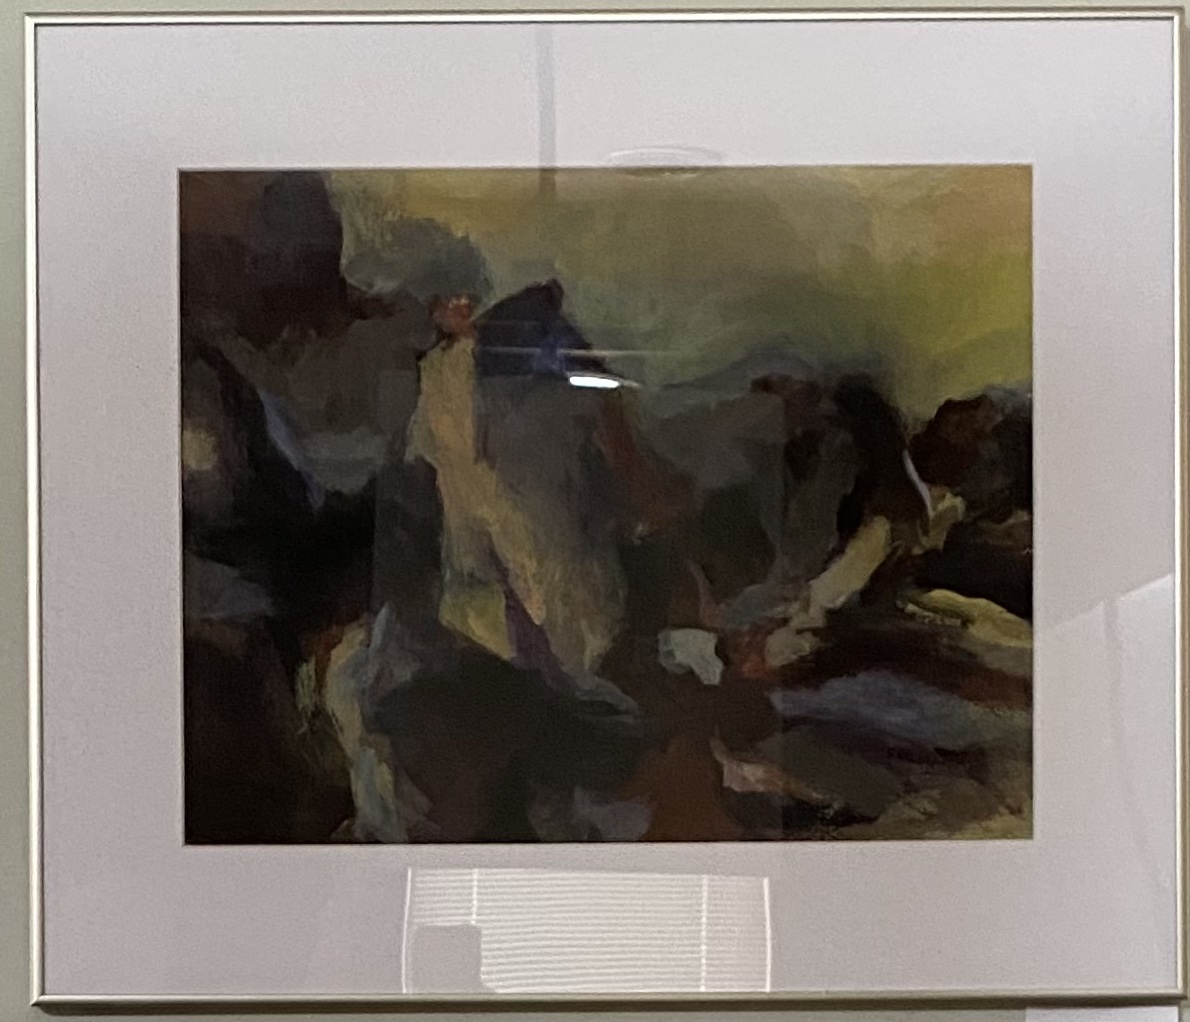 Mountain Viewpoint
Acrylic
27” x 23”
$425.
